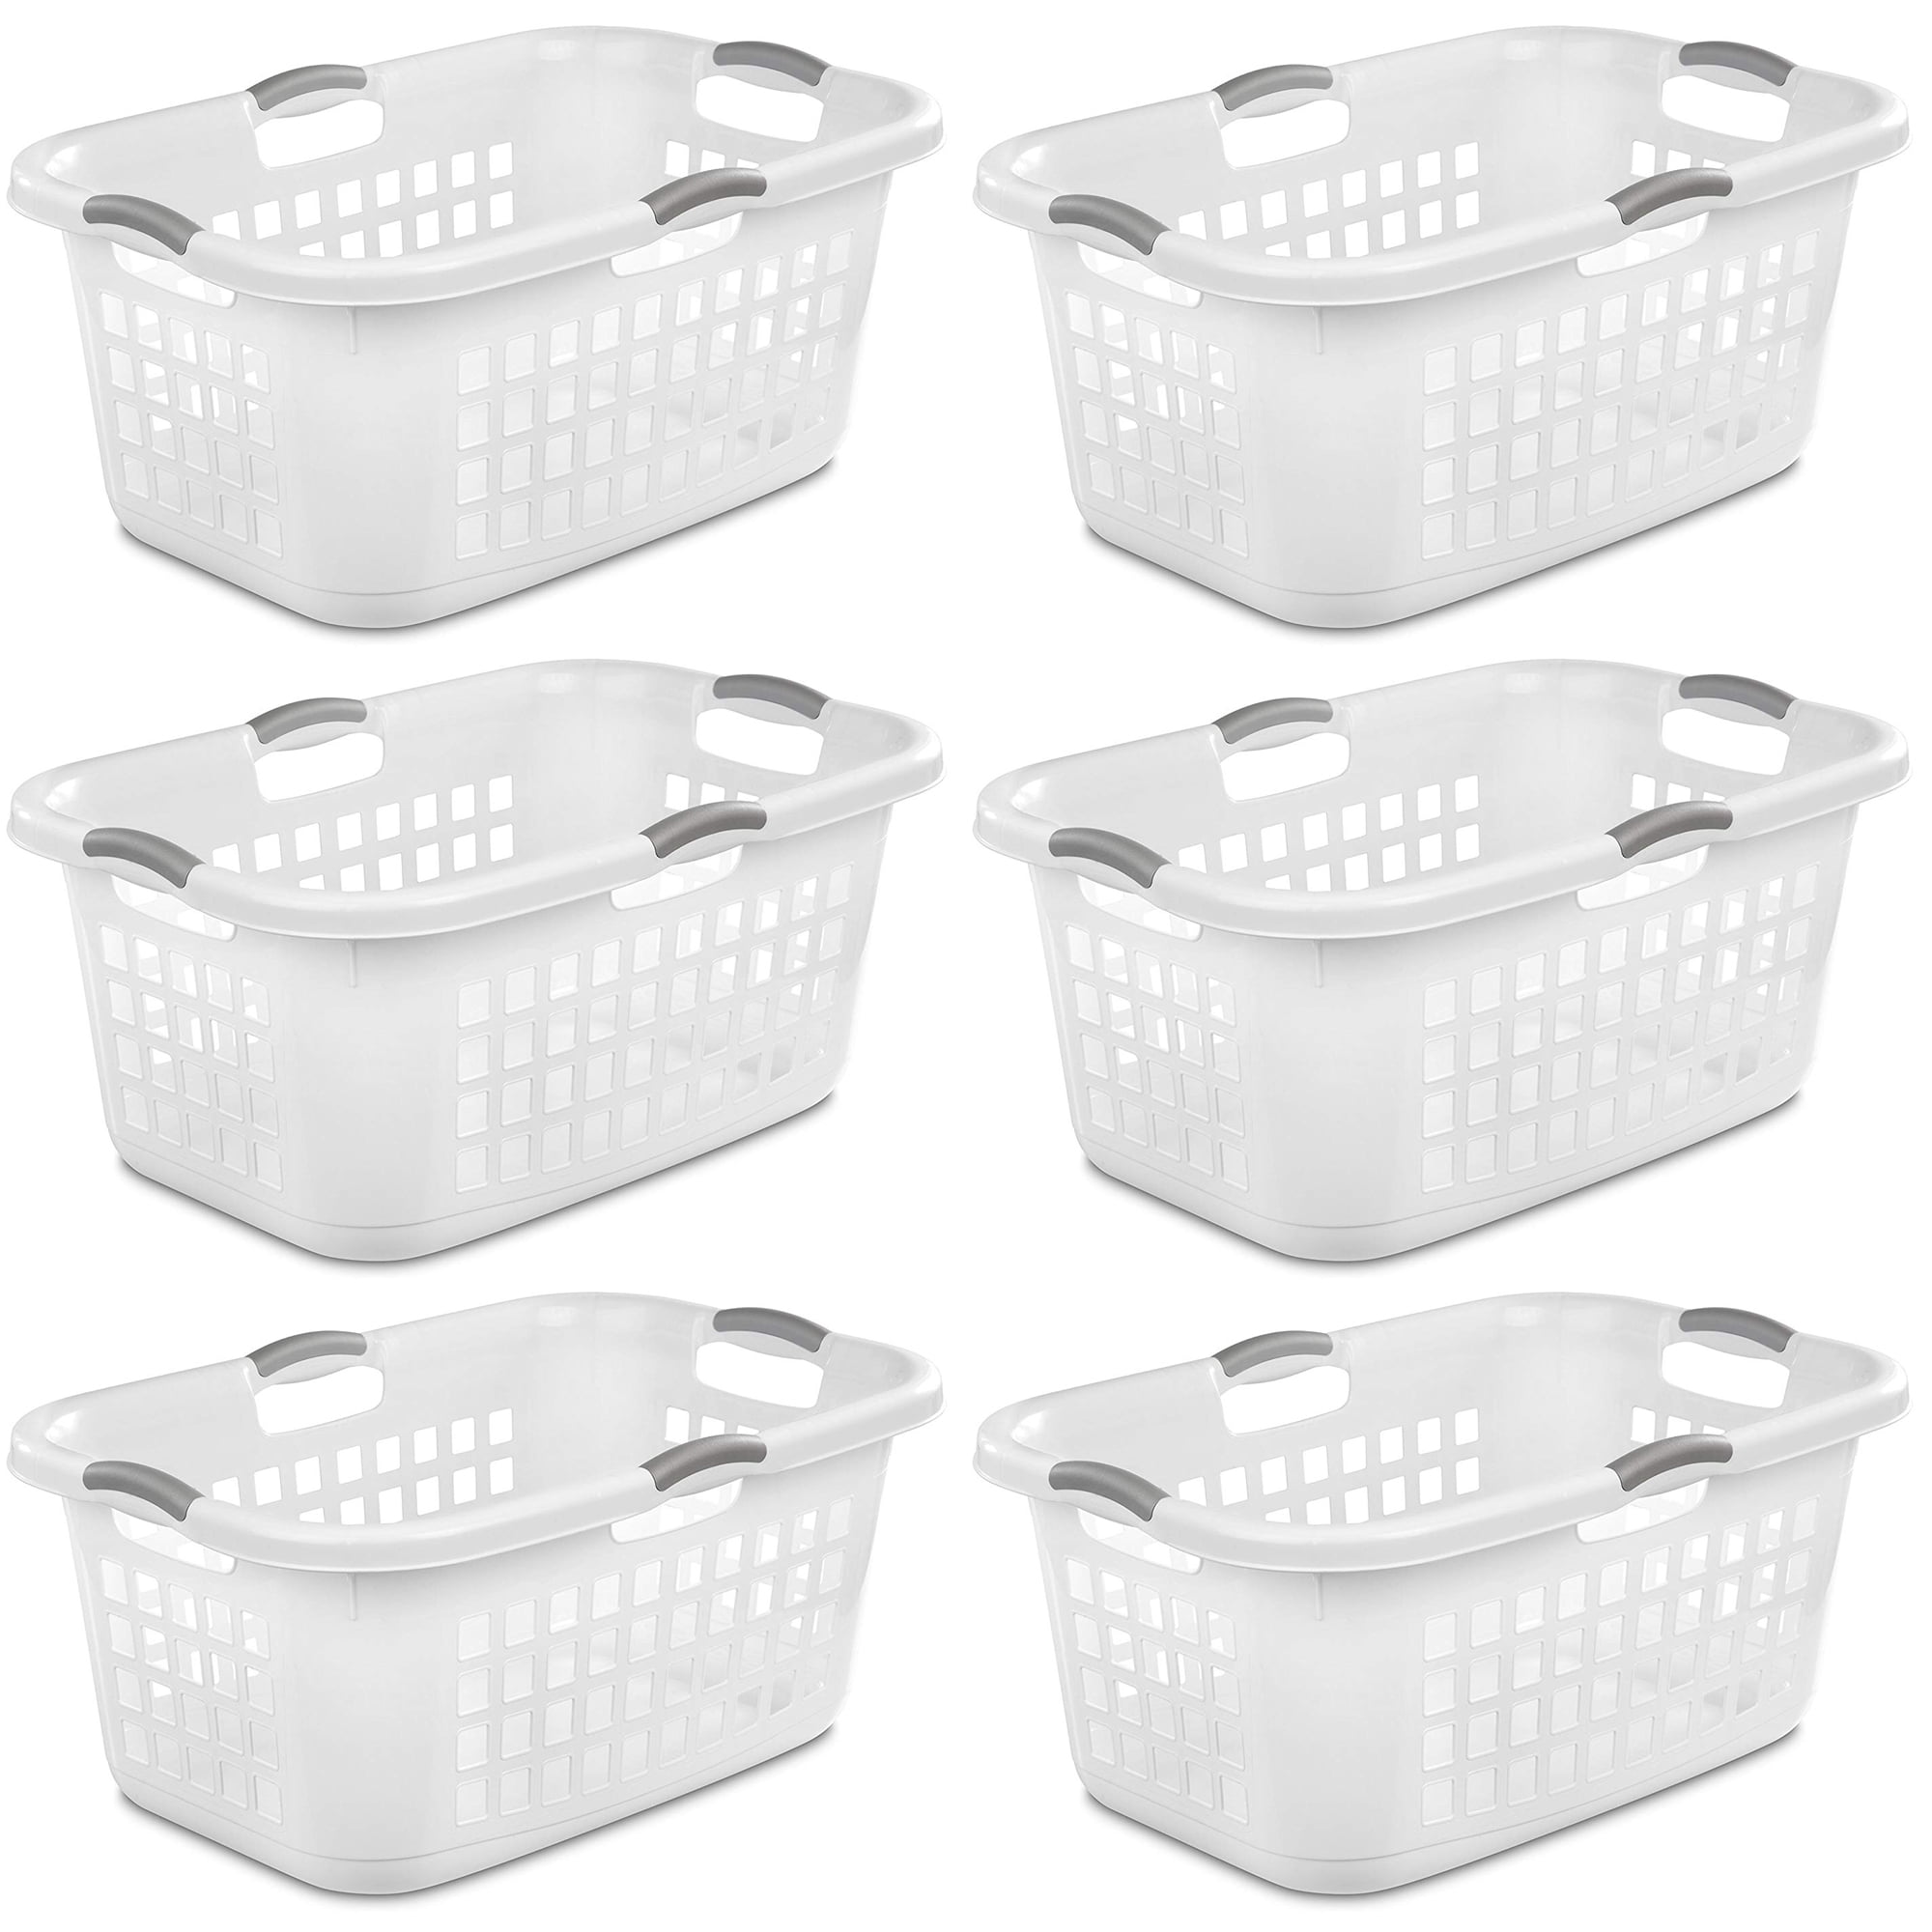 Sterilite 12168006 2 Bushel Plastic Stacking Clothes Laundry Basket White 6-Pack 